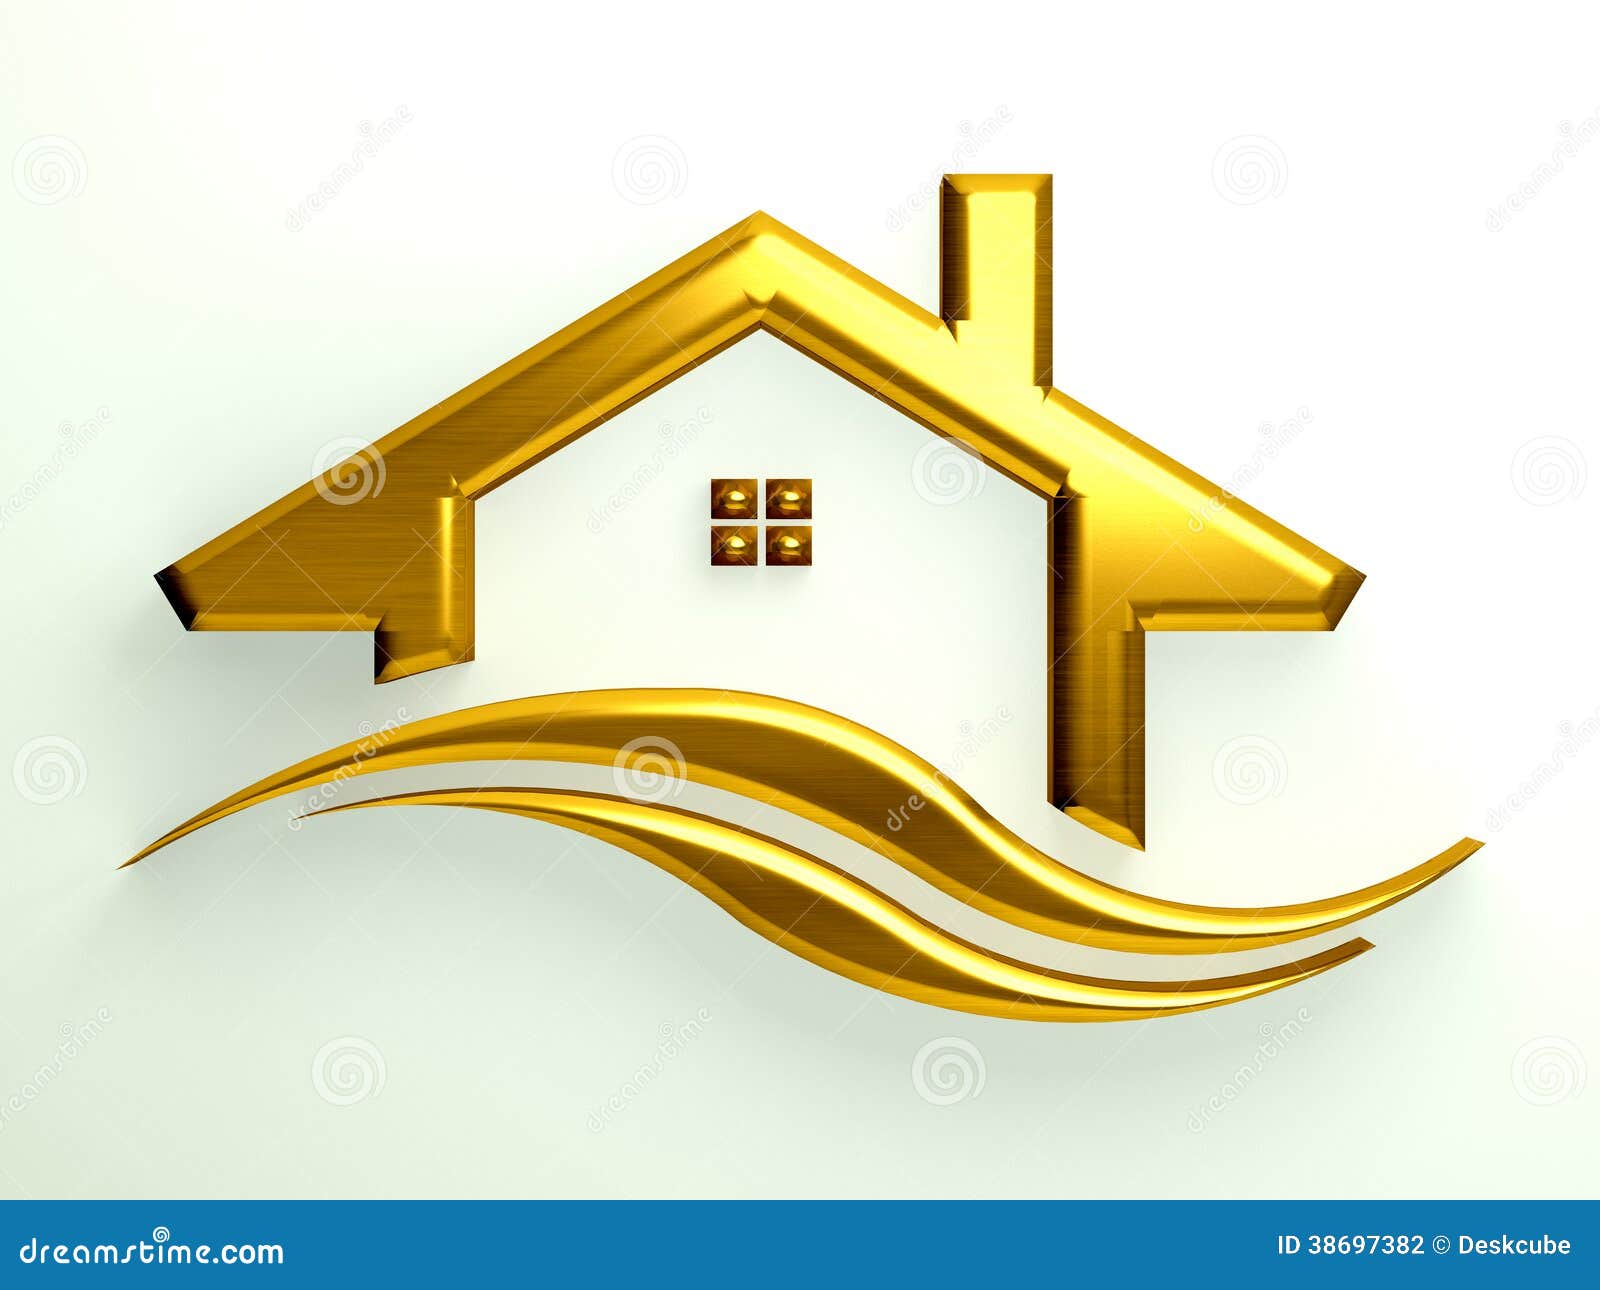 gold house waves logo 38697382